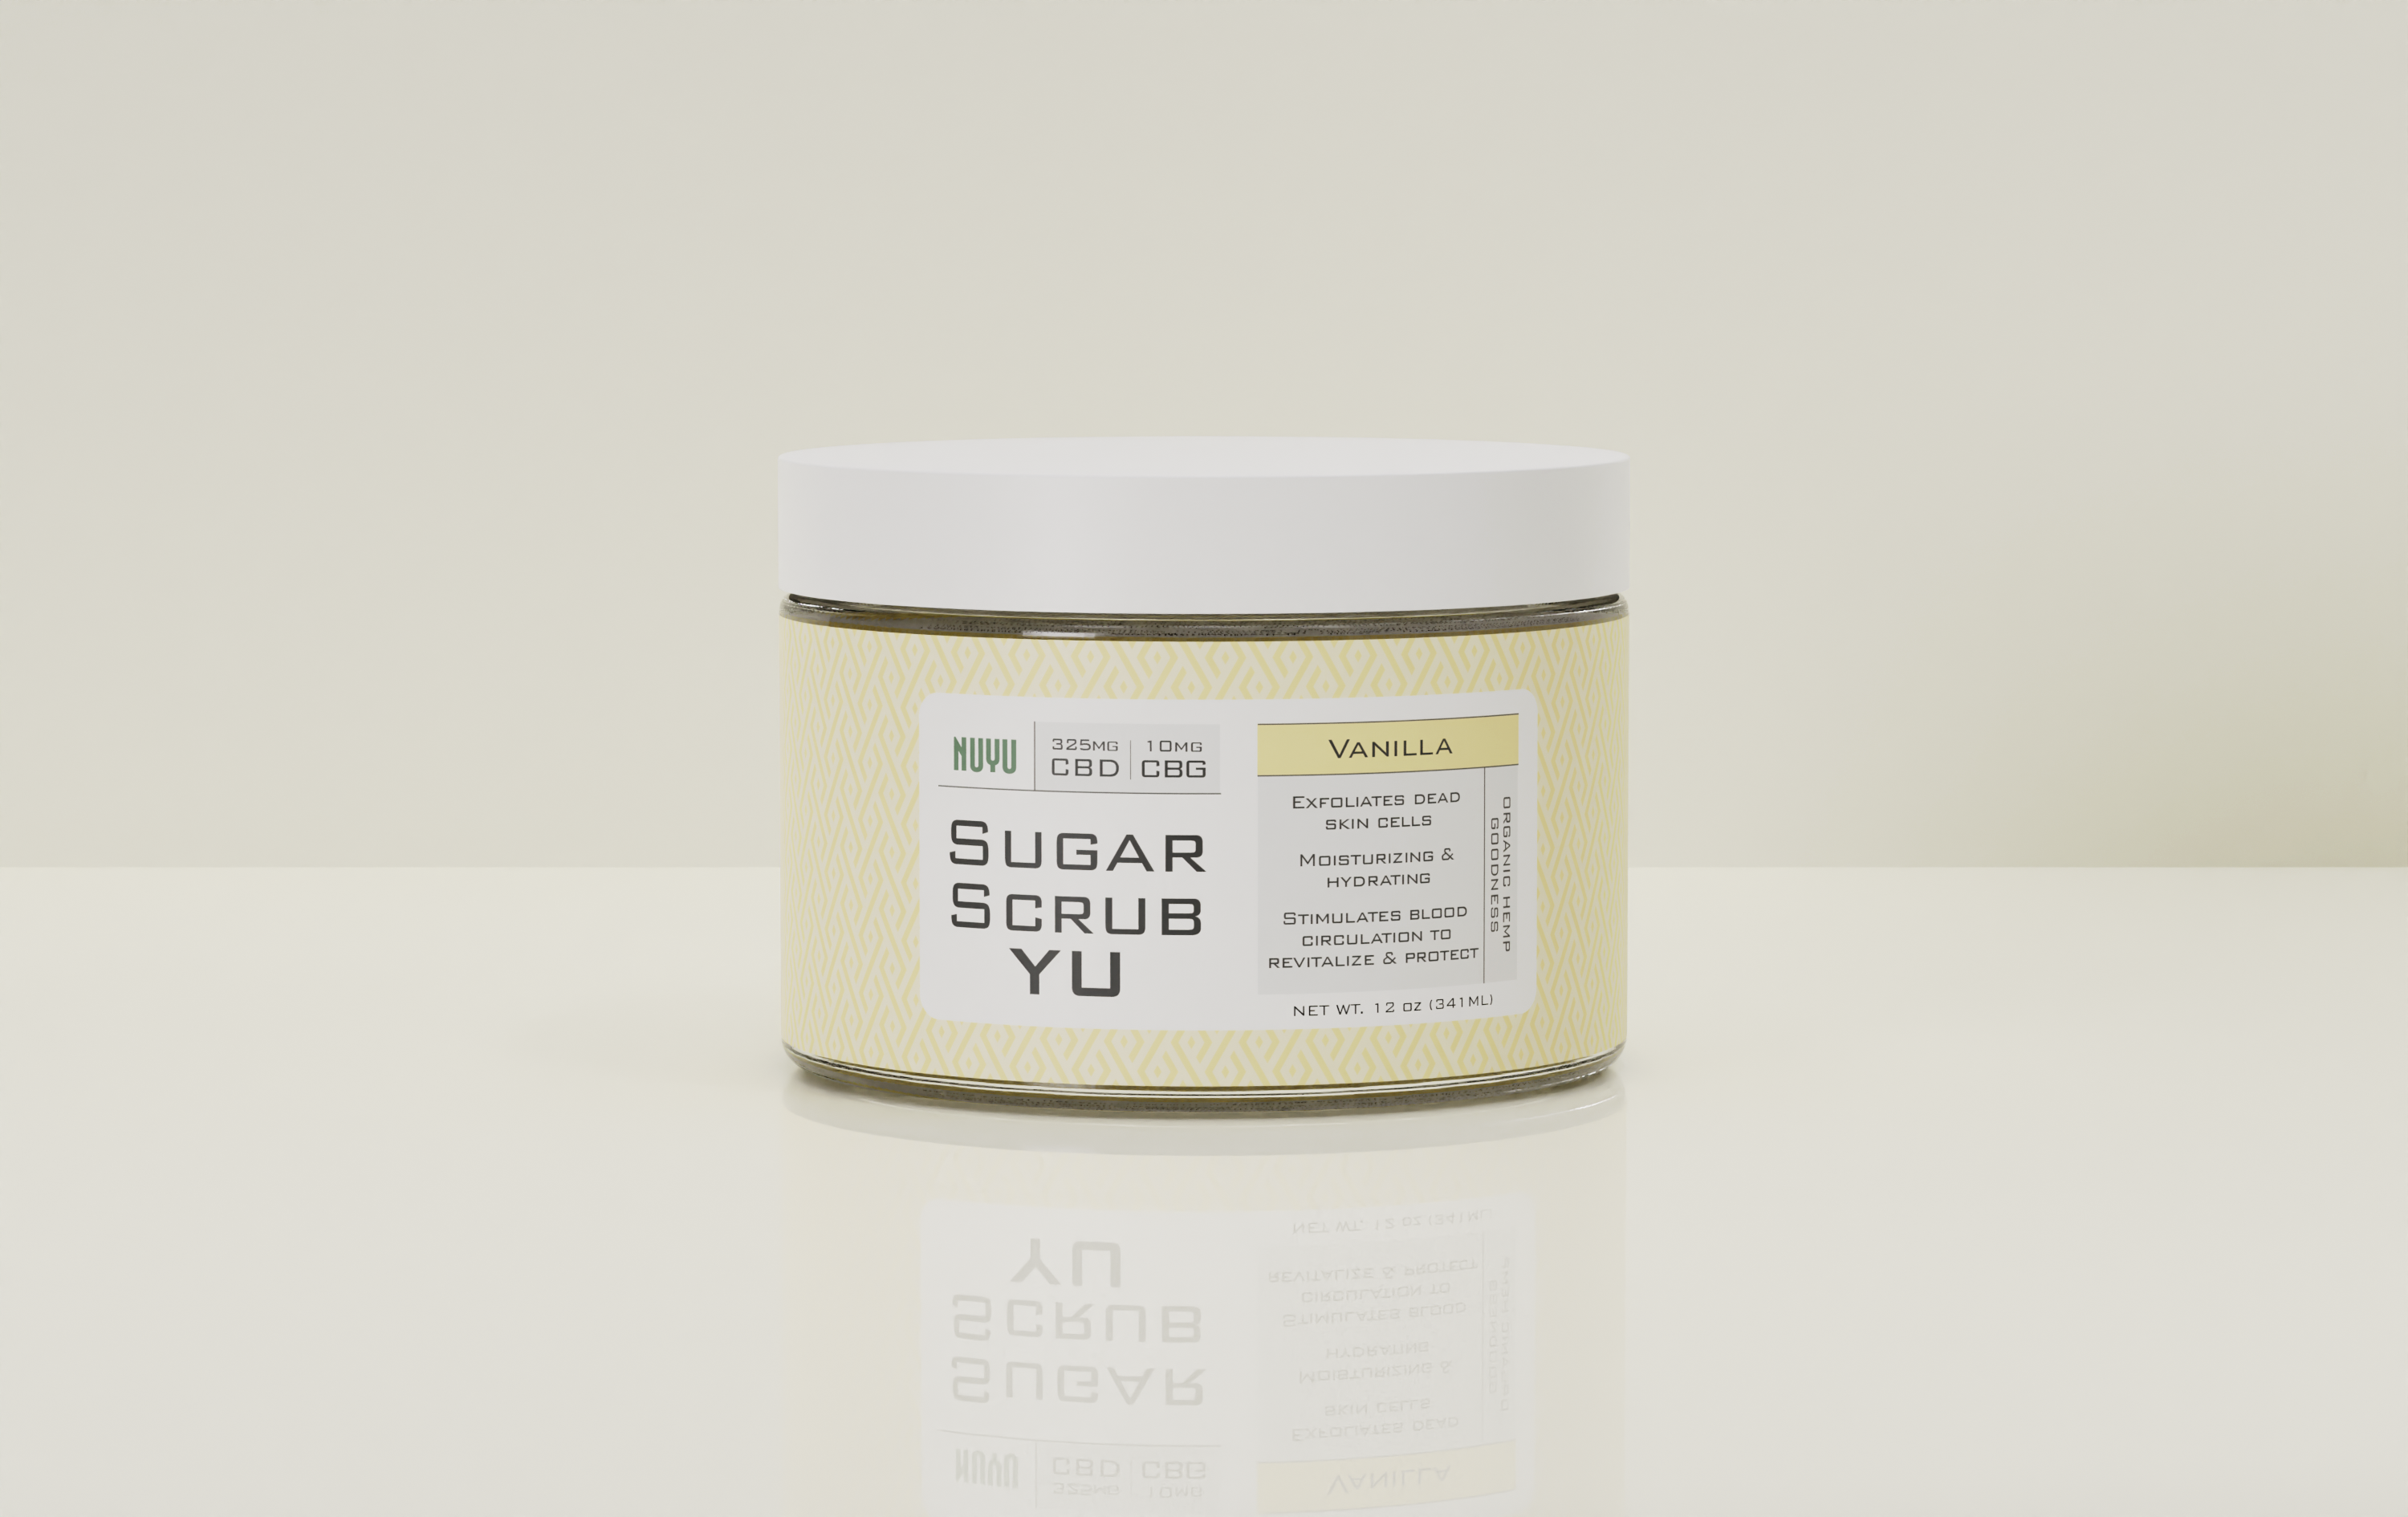 NUYU Sugar Scrub Yu - Vanilla | 12 oz (341ml) | 325mg CBD - 10mg CBG